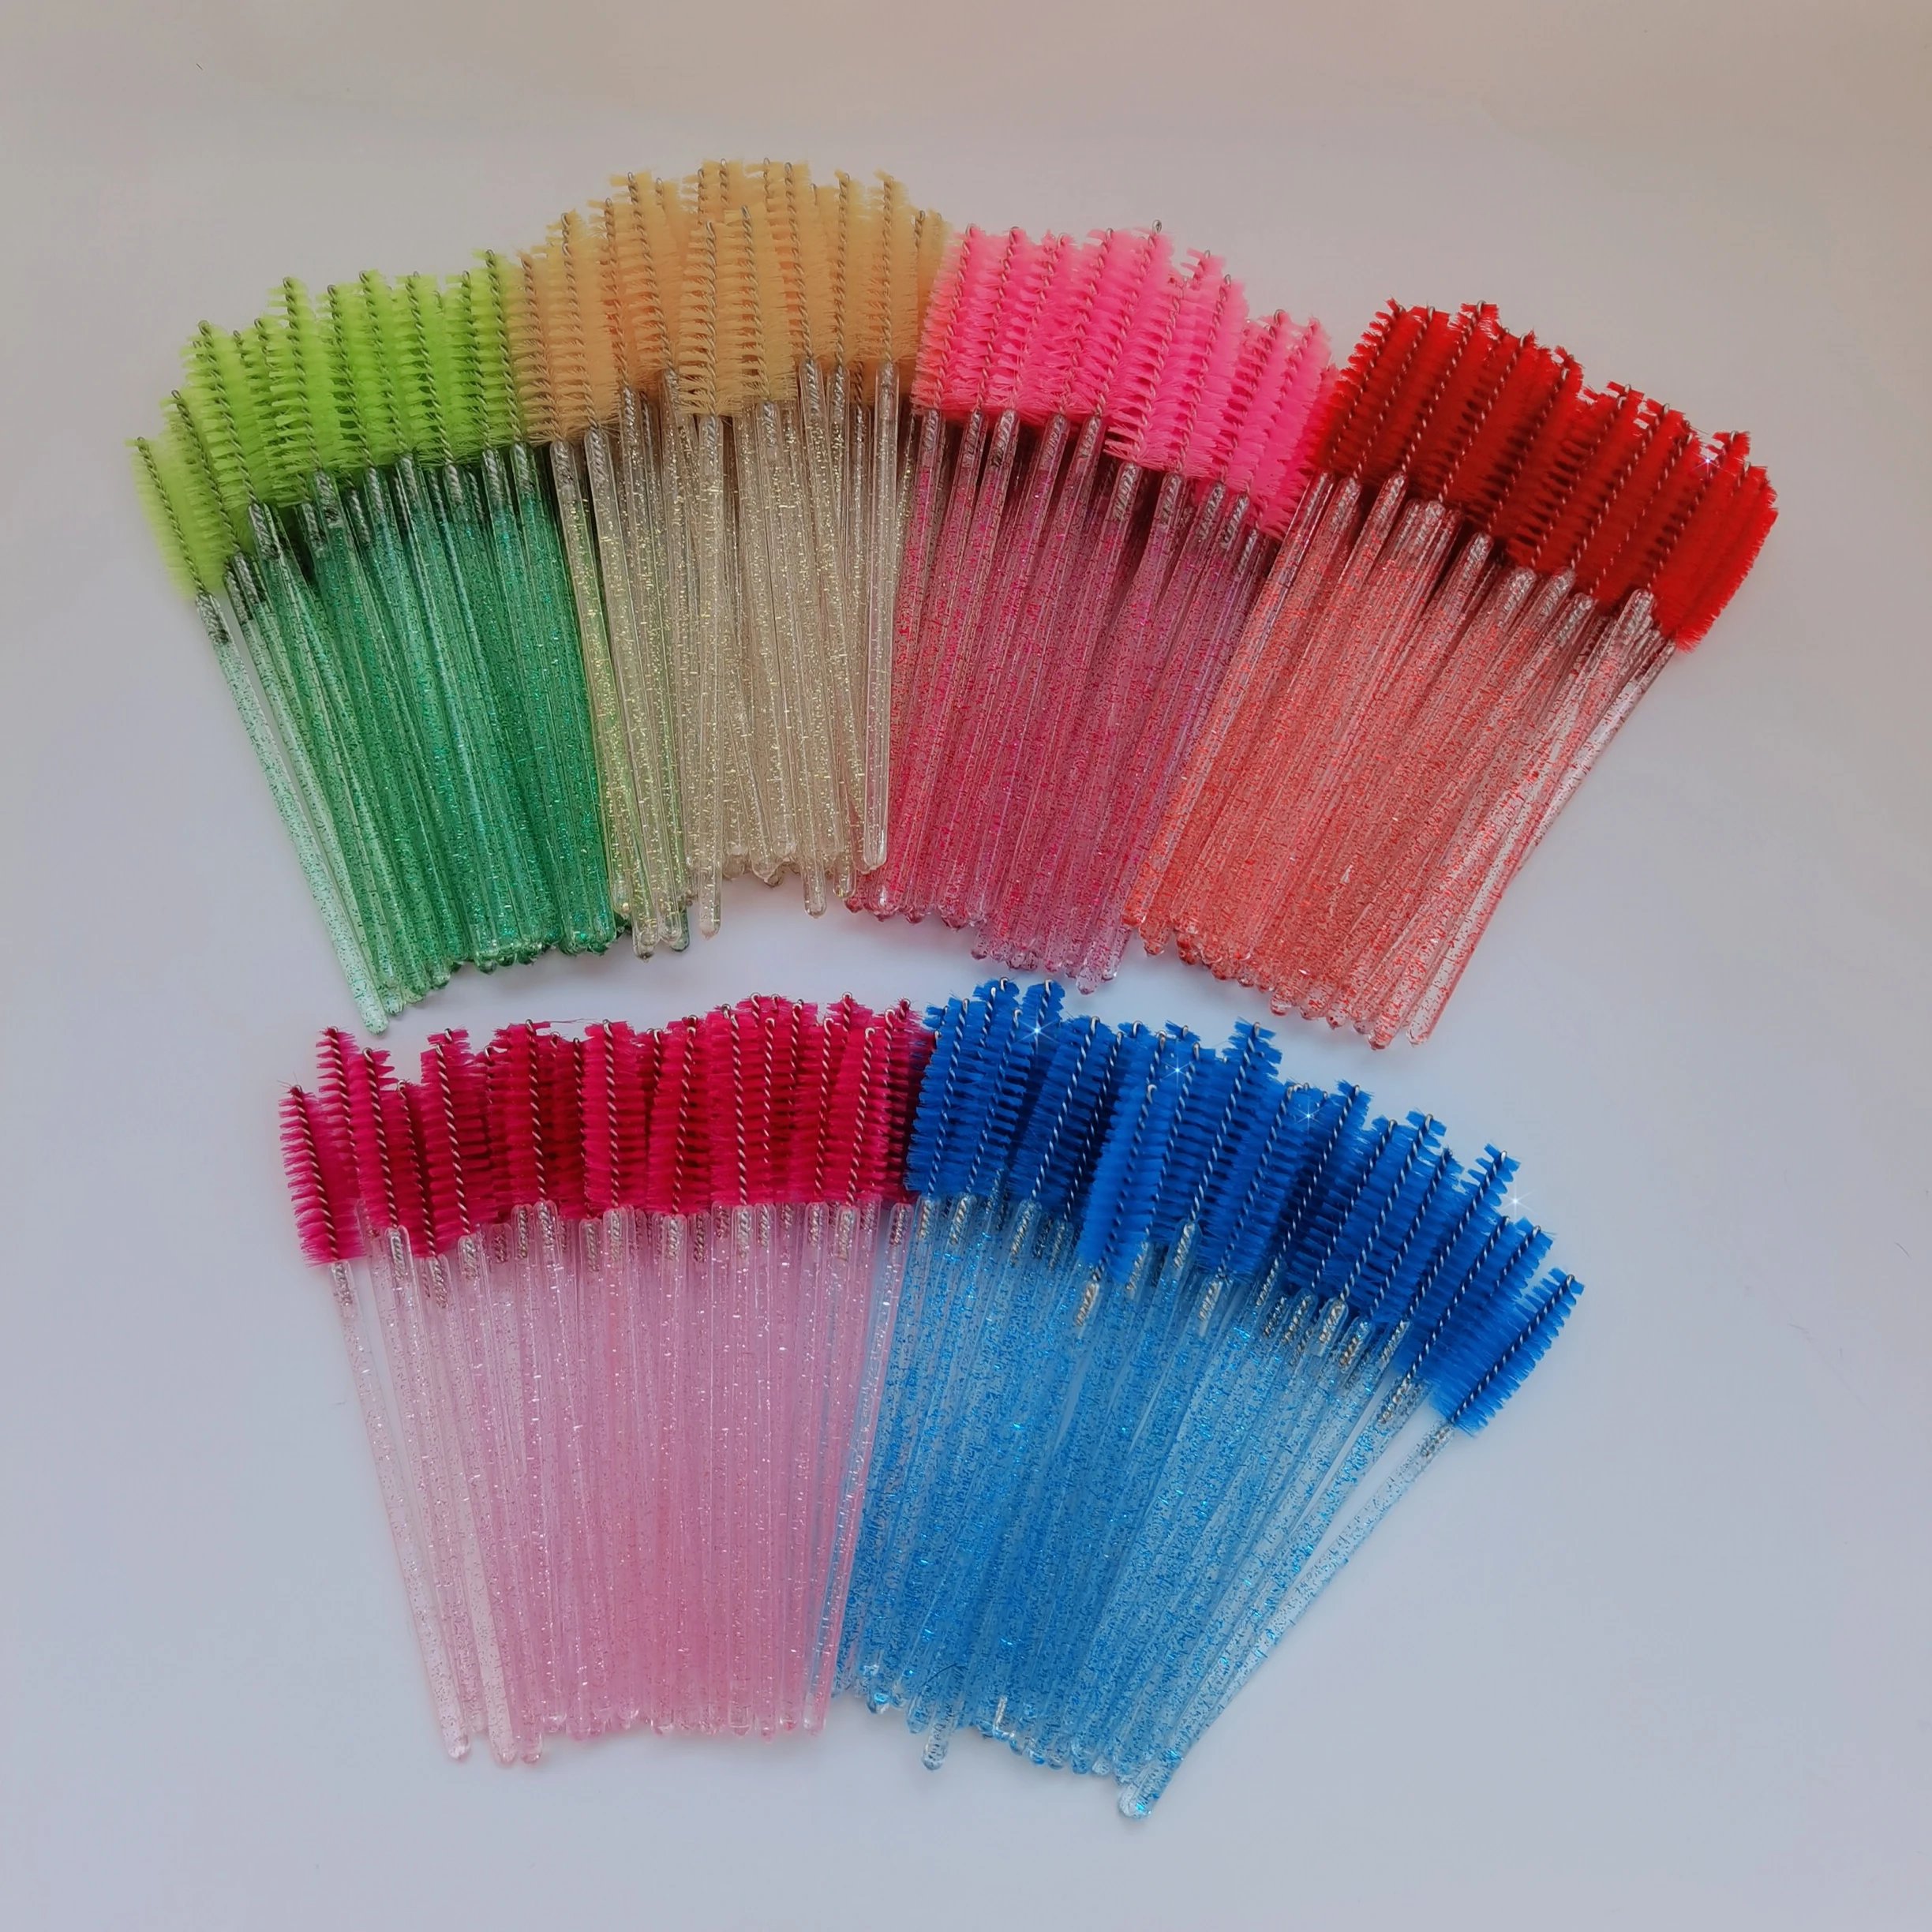 

50 Pcs/Bag Lash Cleansing Brushes Disposable Crystal Handle Nylon Mascara Wands Spoolies Shiny Crystal Eyelash Applicator, Pink,yellow,blue,green,rose red